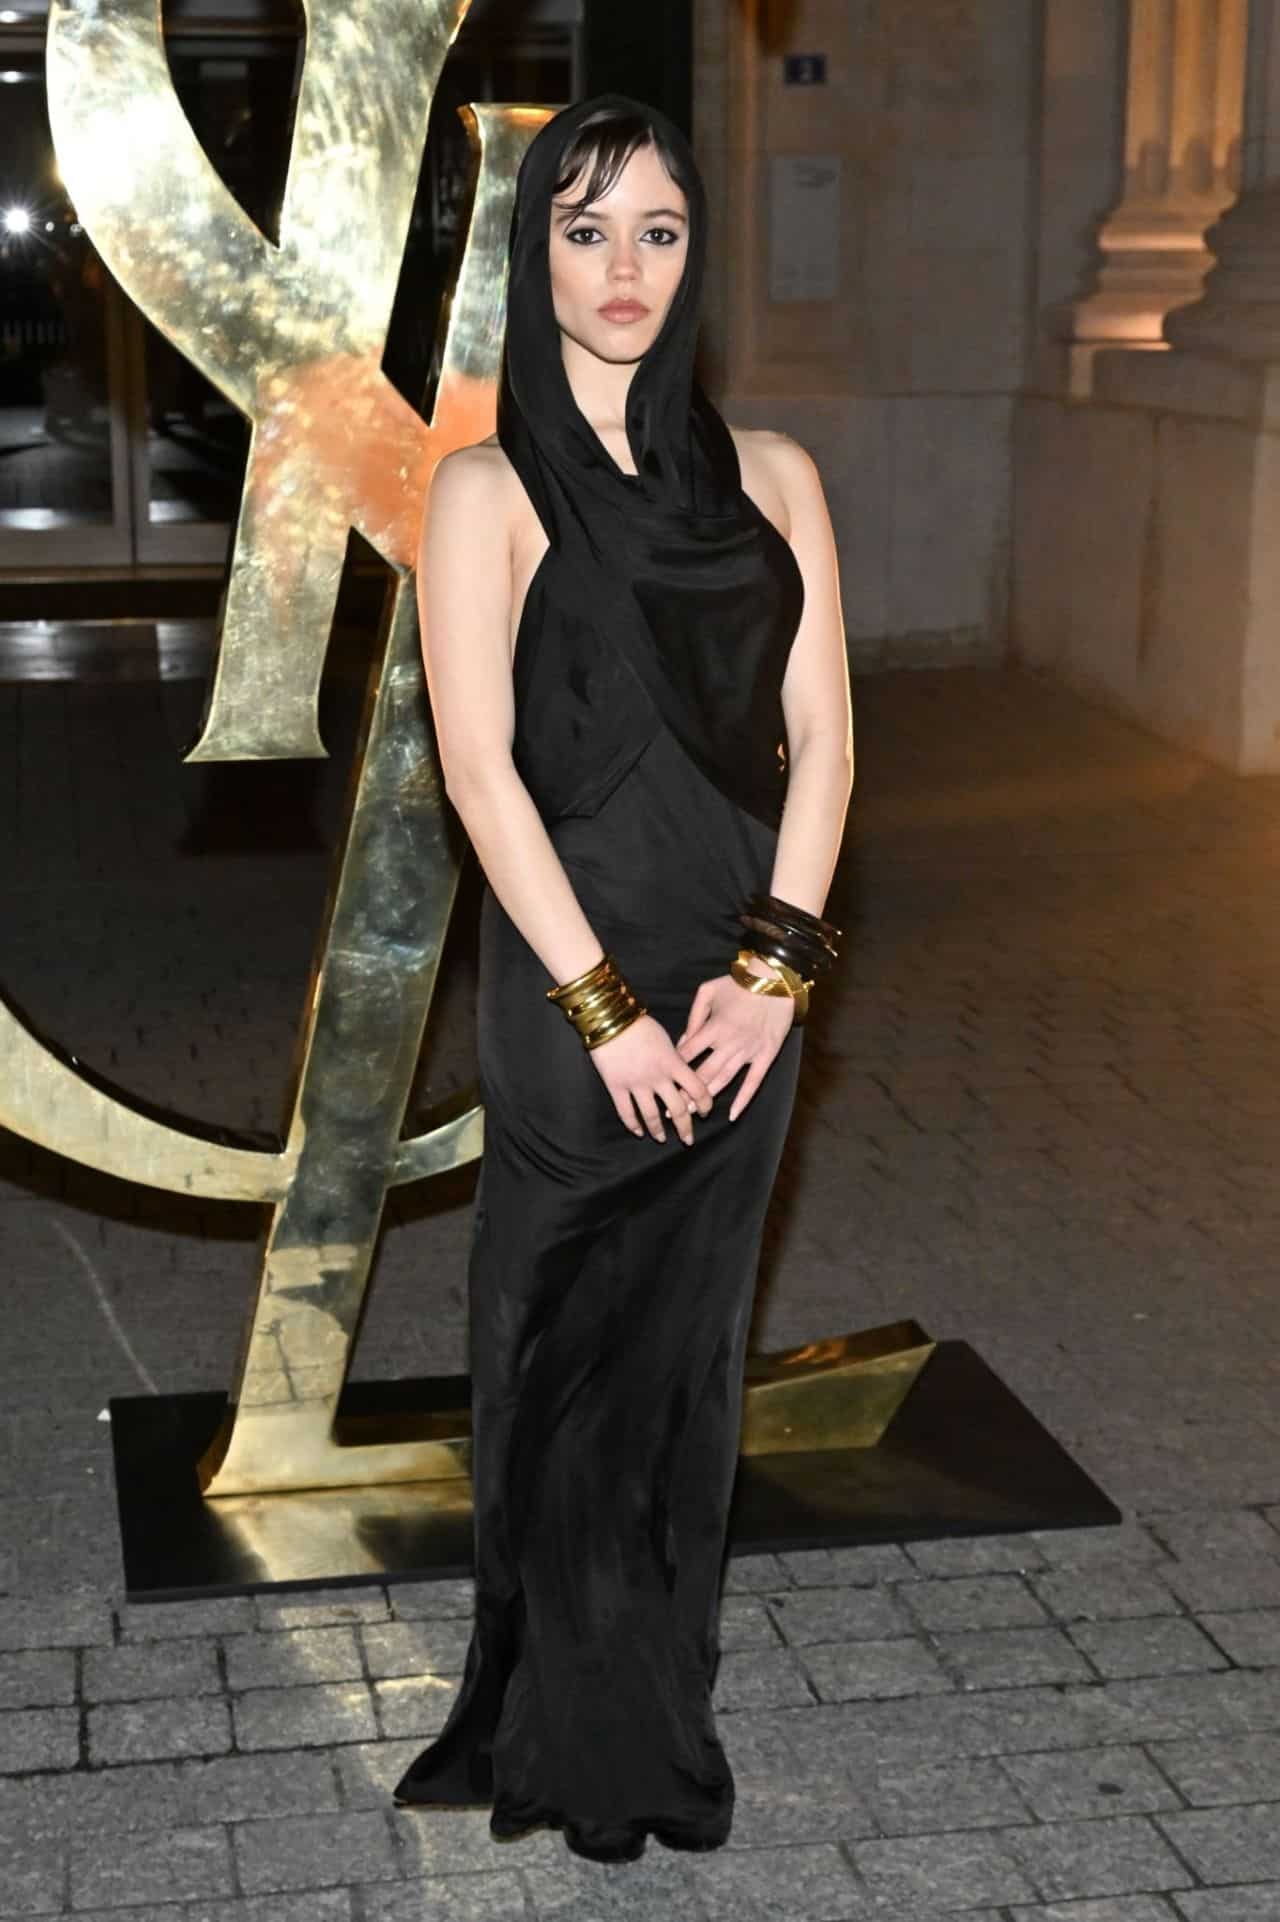 Jenna Ortega Shines at Paris Fashion Week with Stunning Backless Dress & Fashion-forward Look